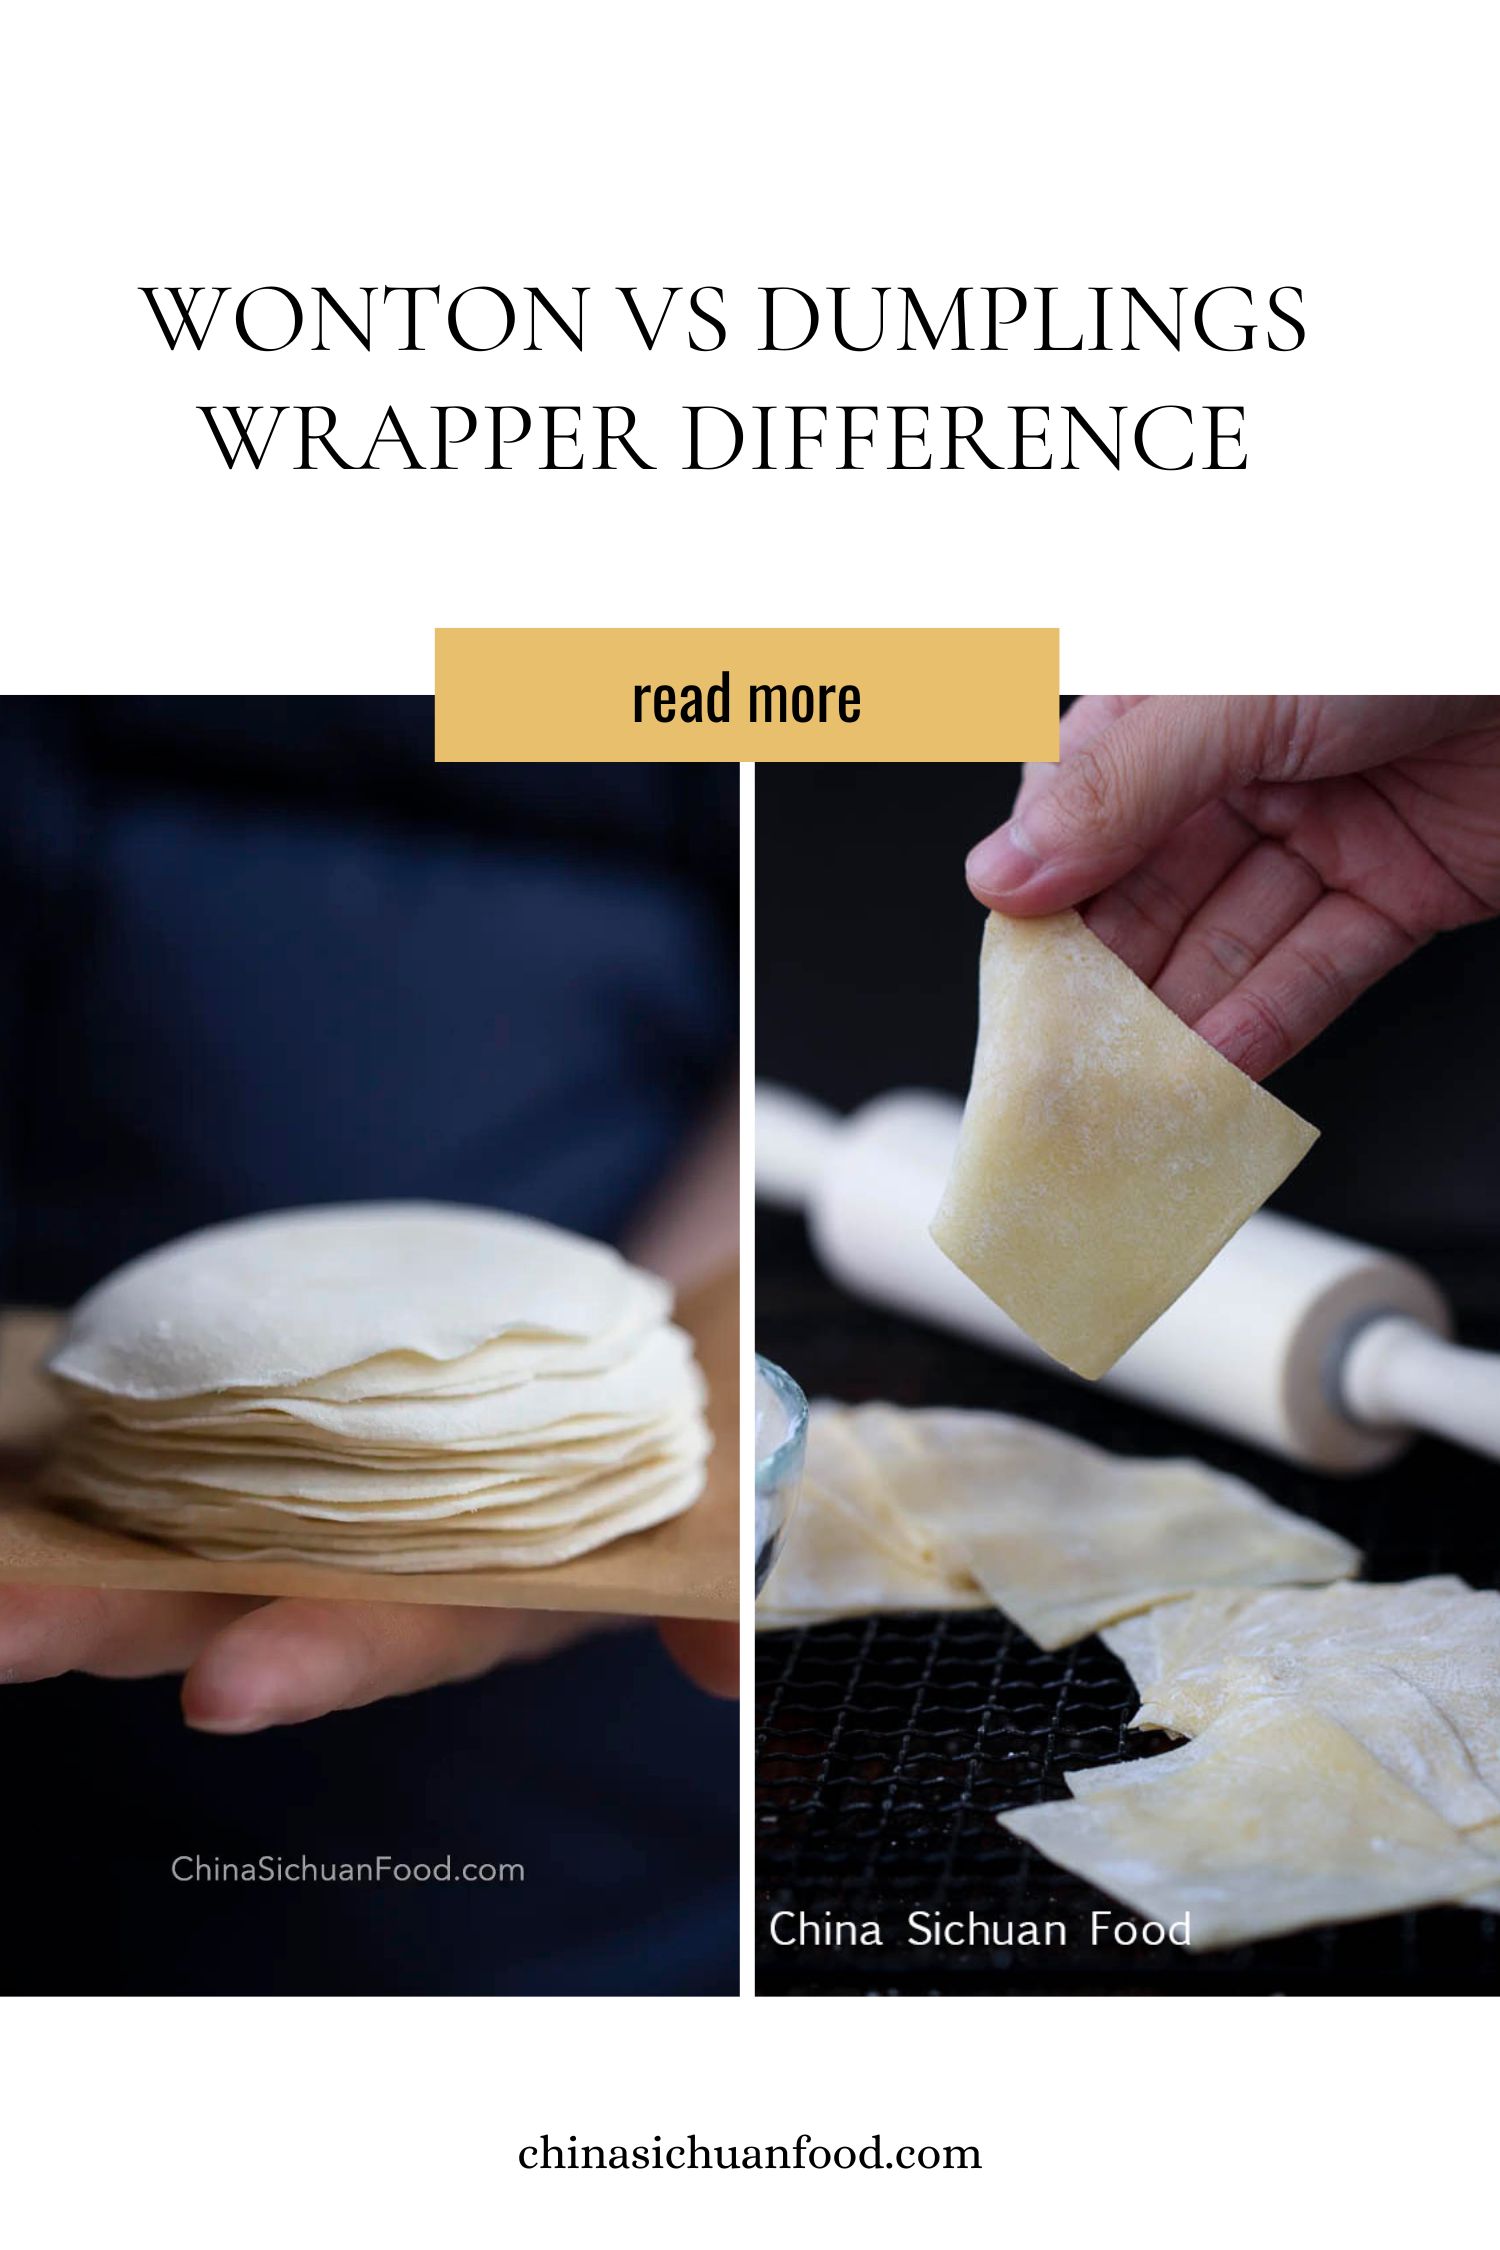 wontons vs dumplings vs potstickers|chinasichuanfood.com